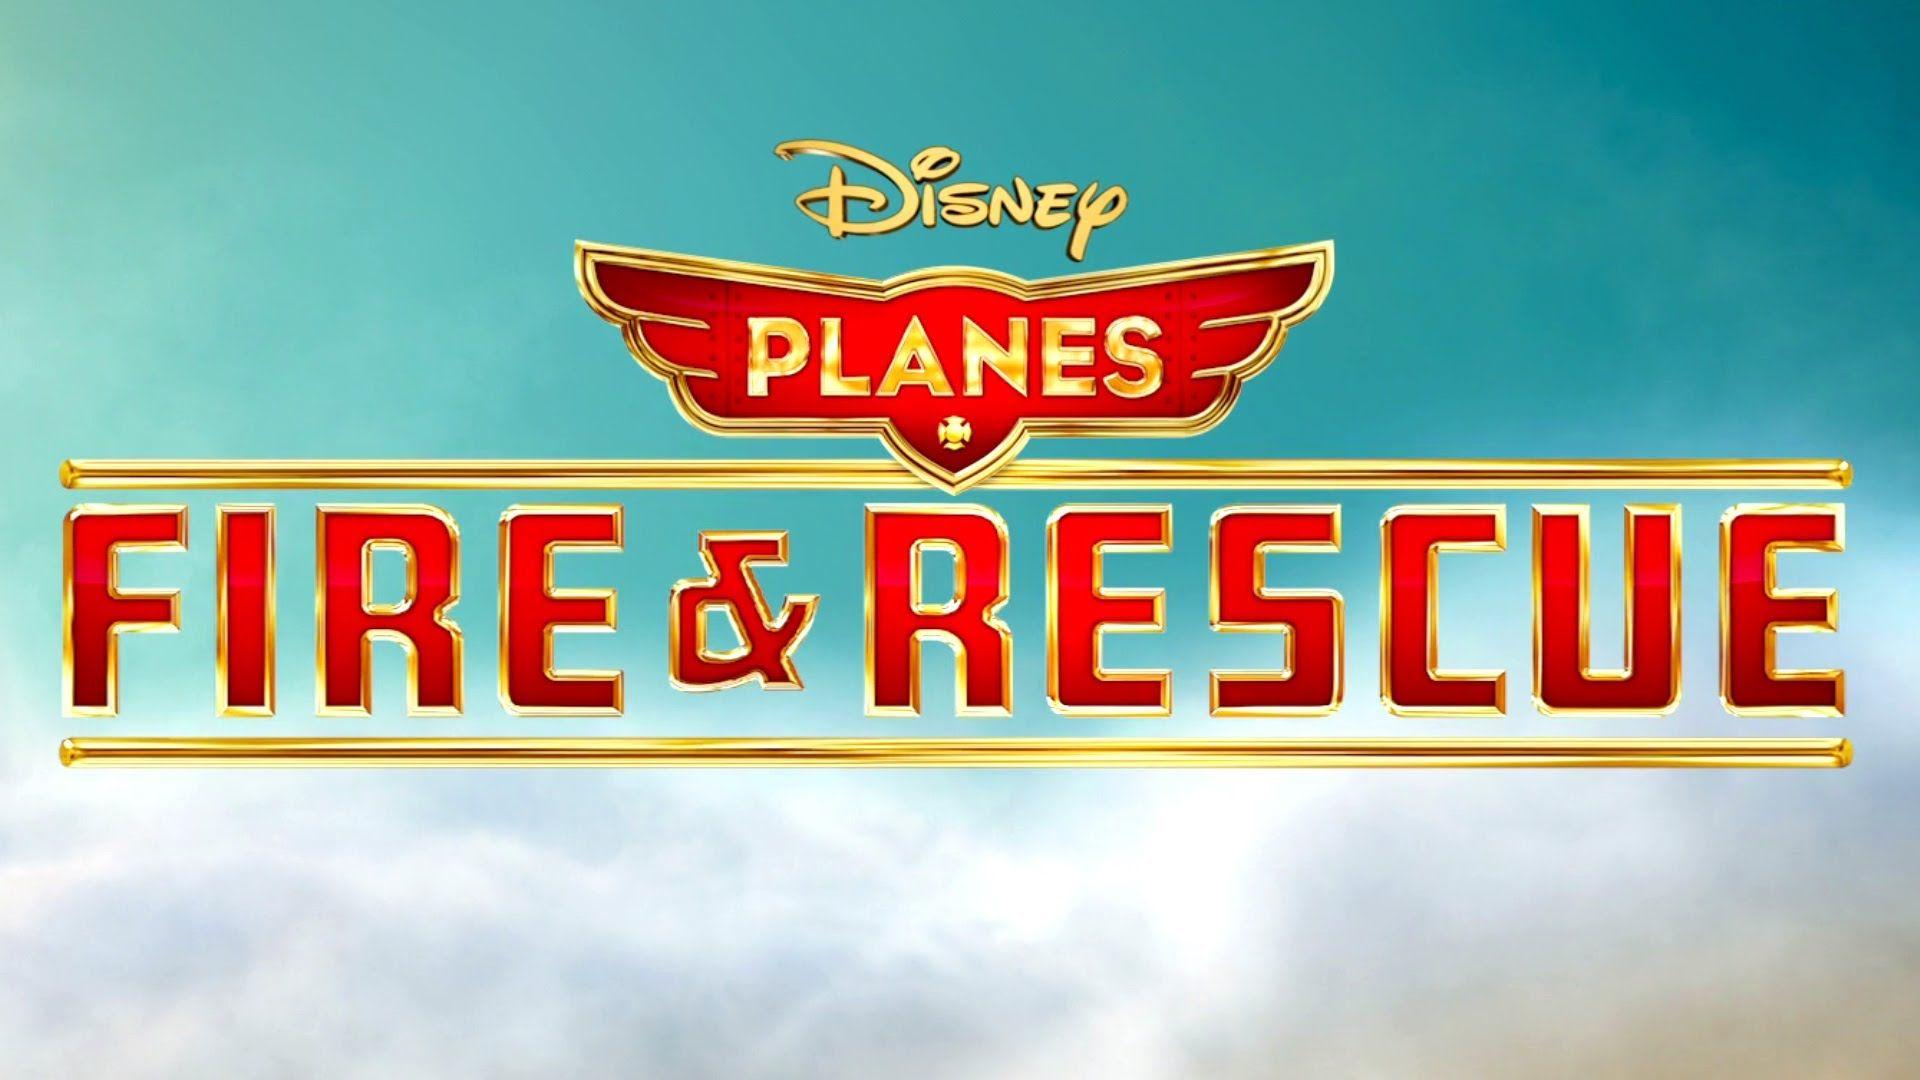 Disney Planes Movie Logo - Planes Fire and Rescue Logo 31123 1920x1080px